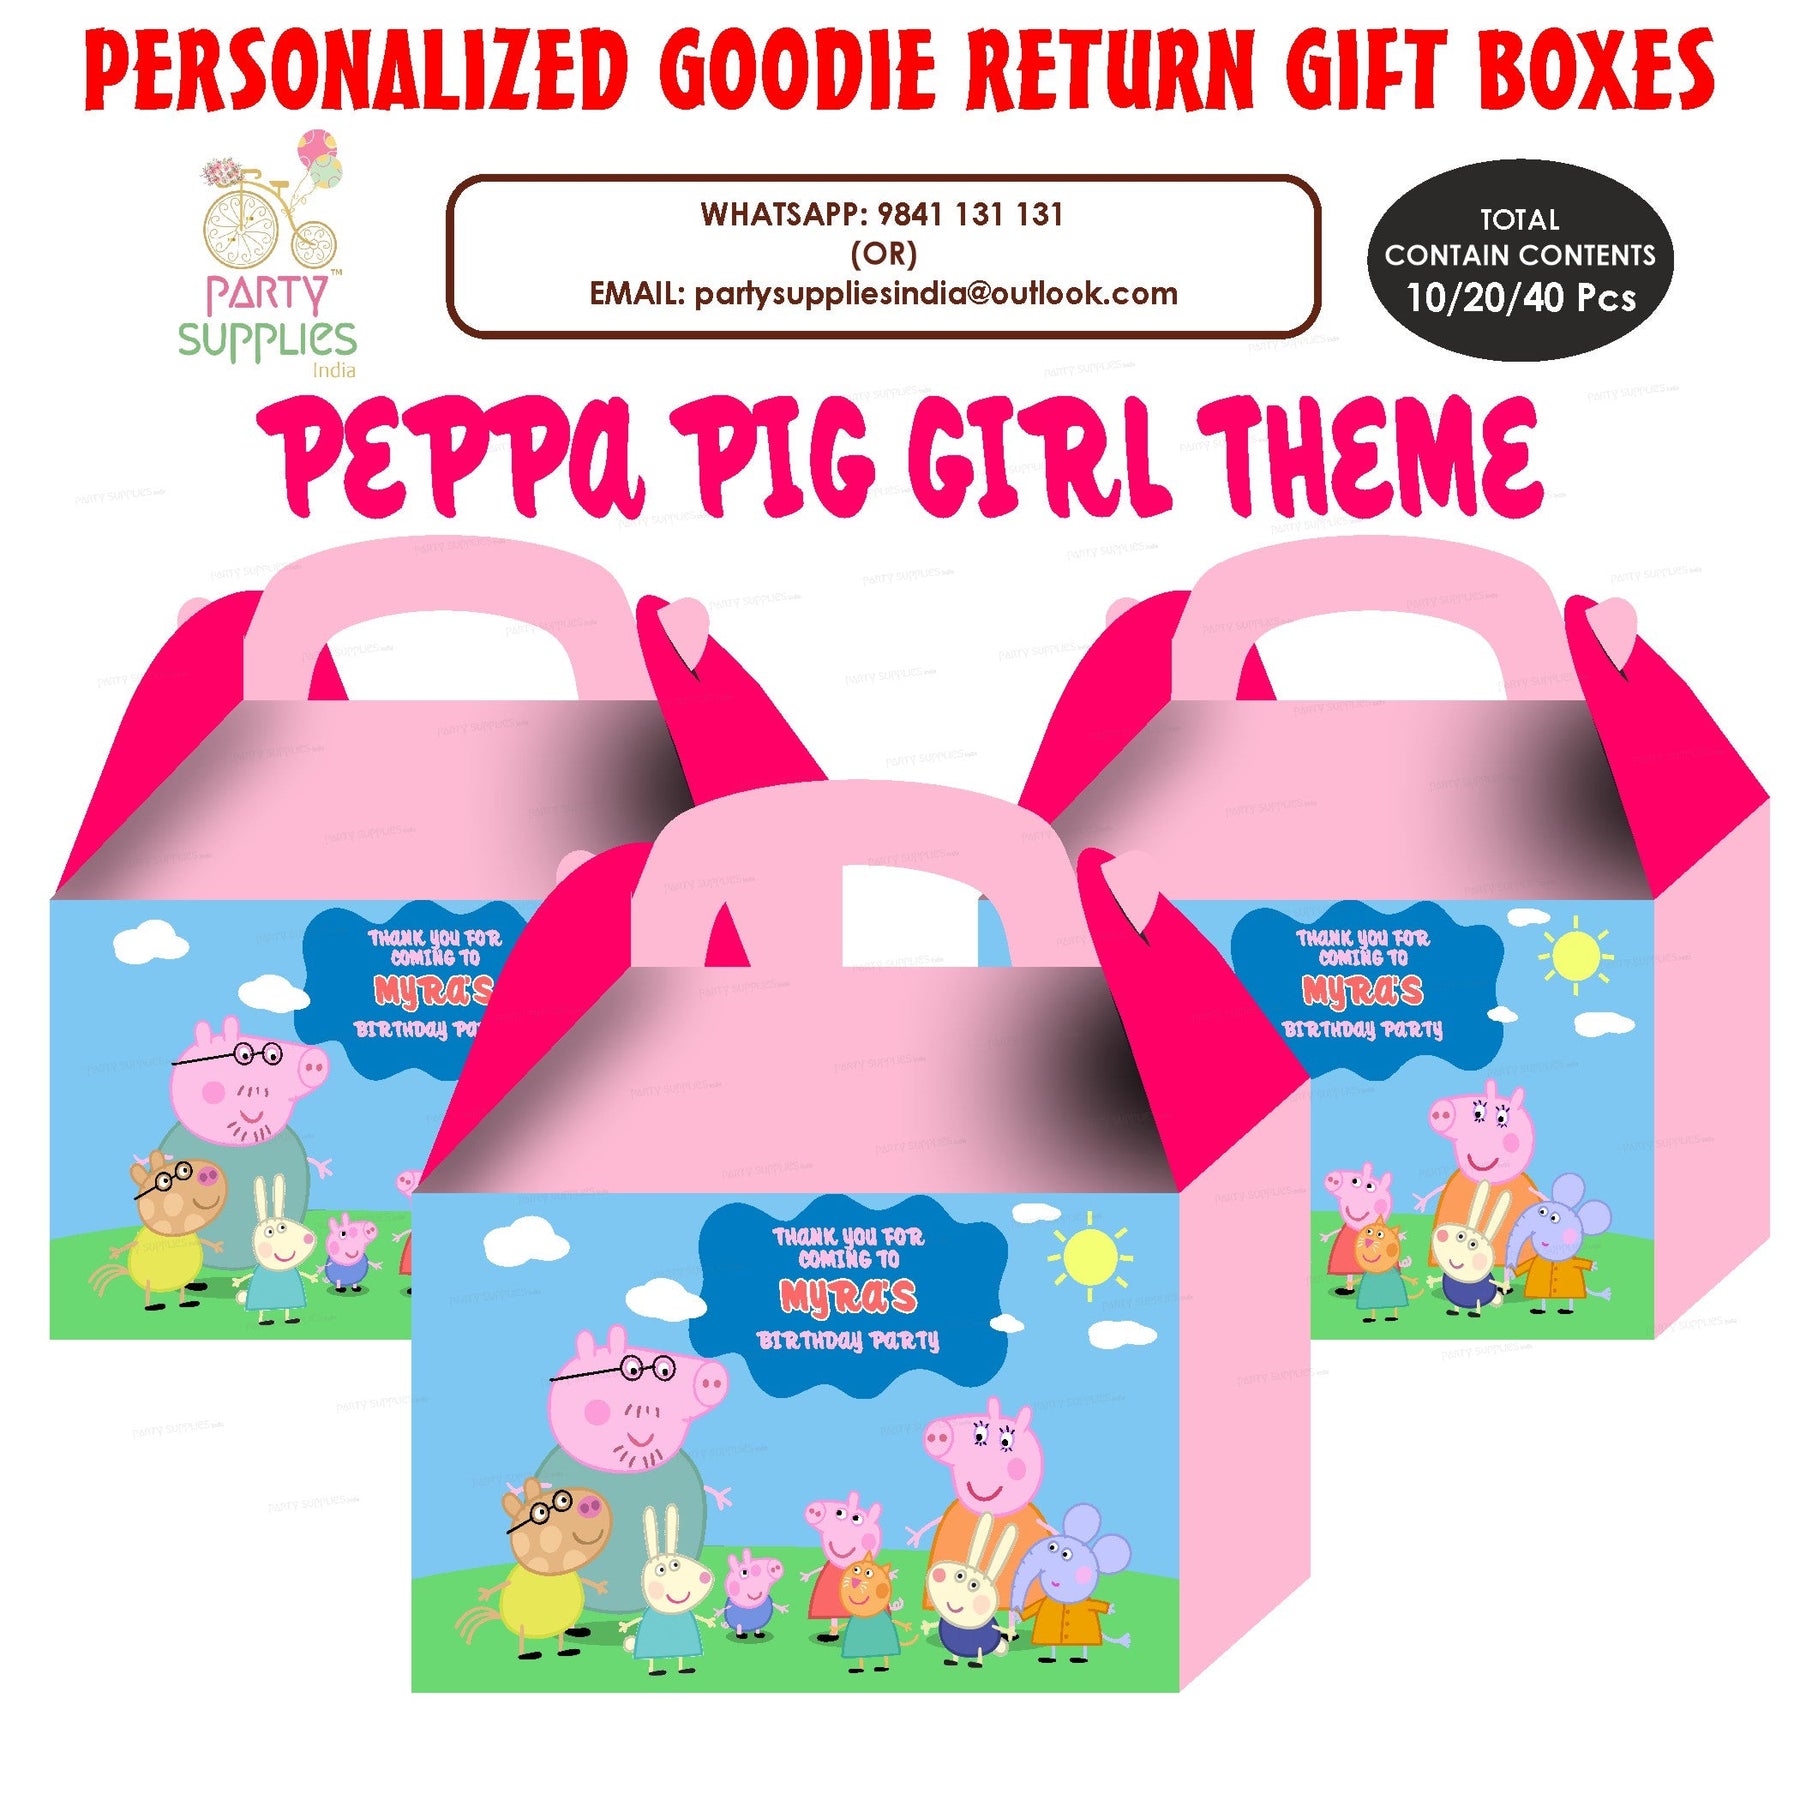 PSI Peppa Pig Girl Theme Goodie Return Gift Boxes